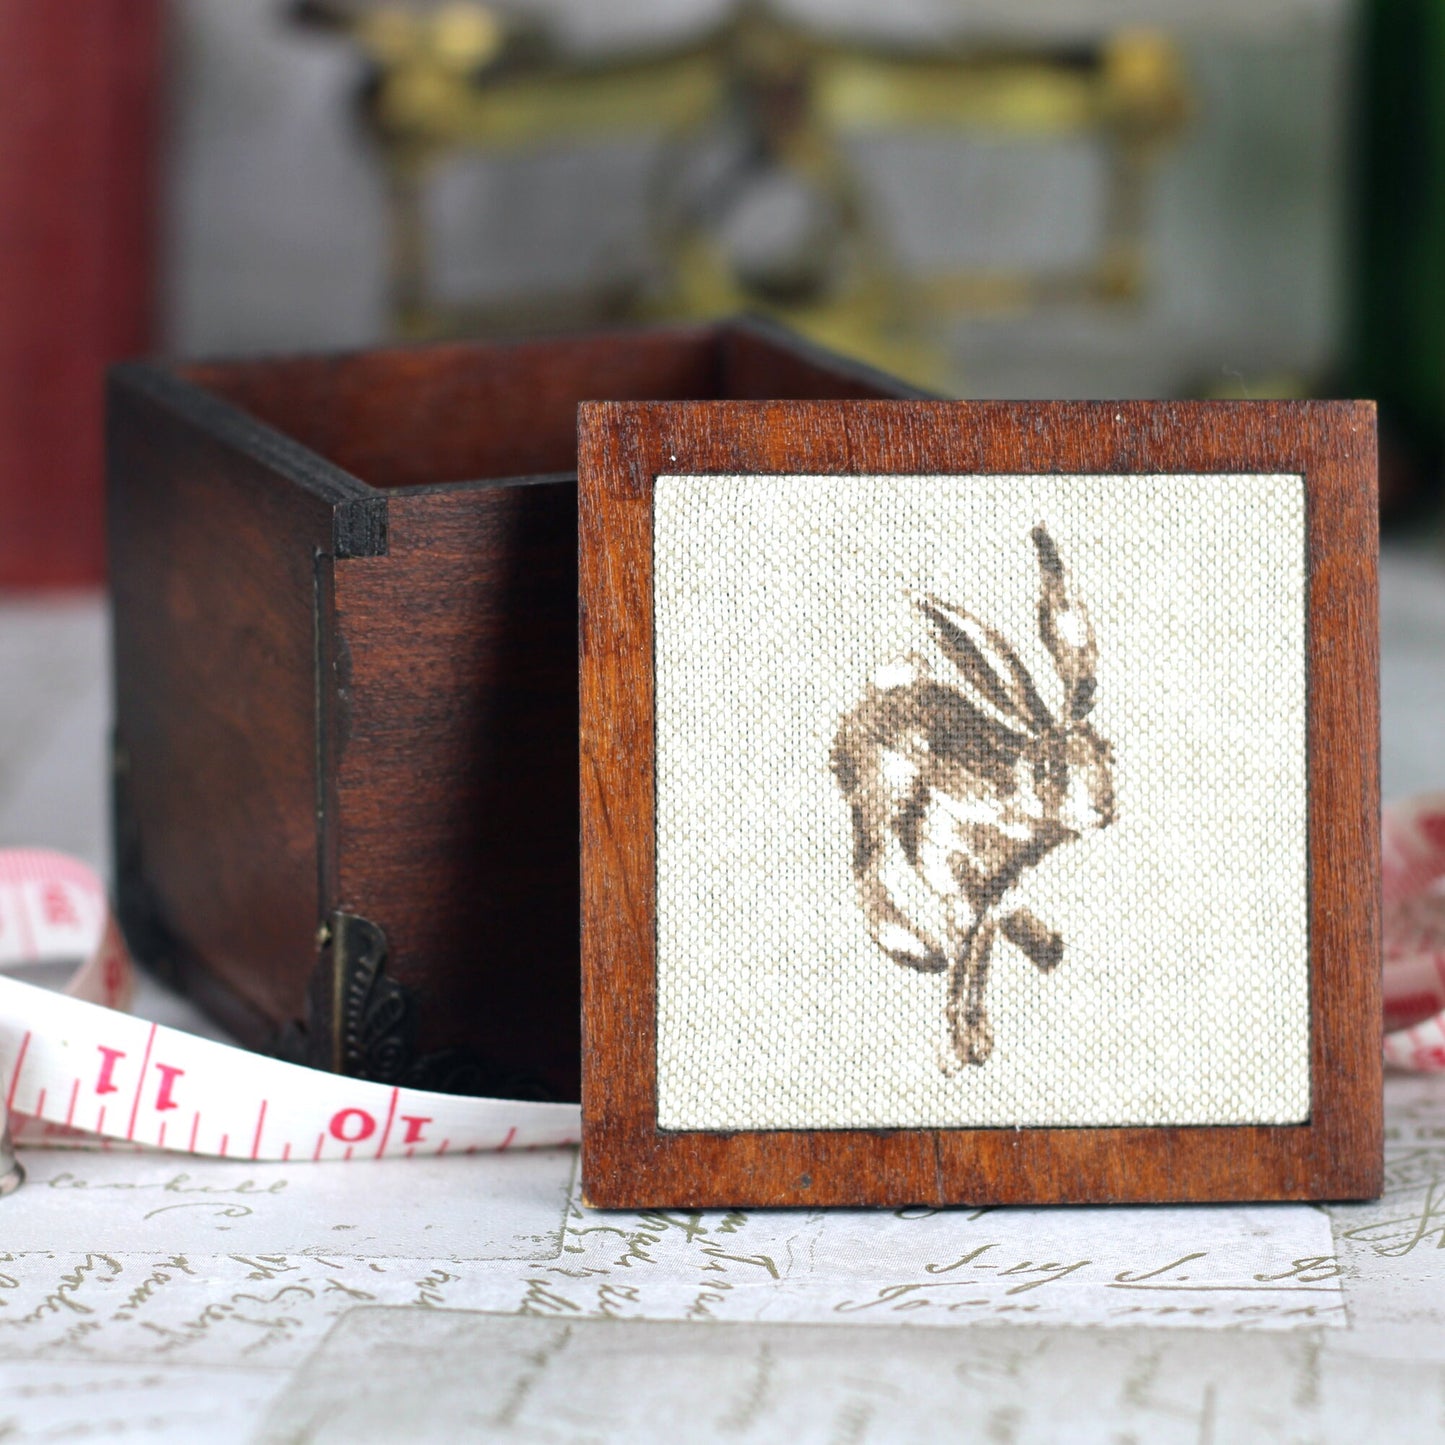 Hare Design Wooden Pin Cushion Sewing Box